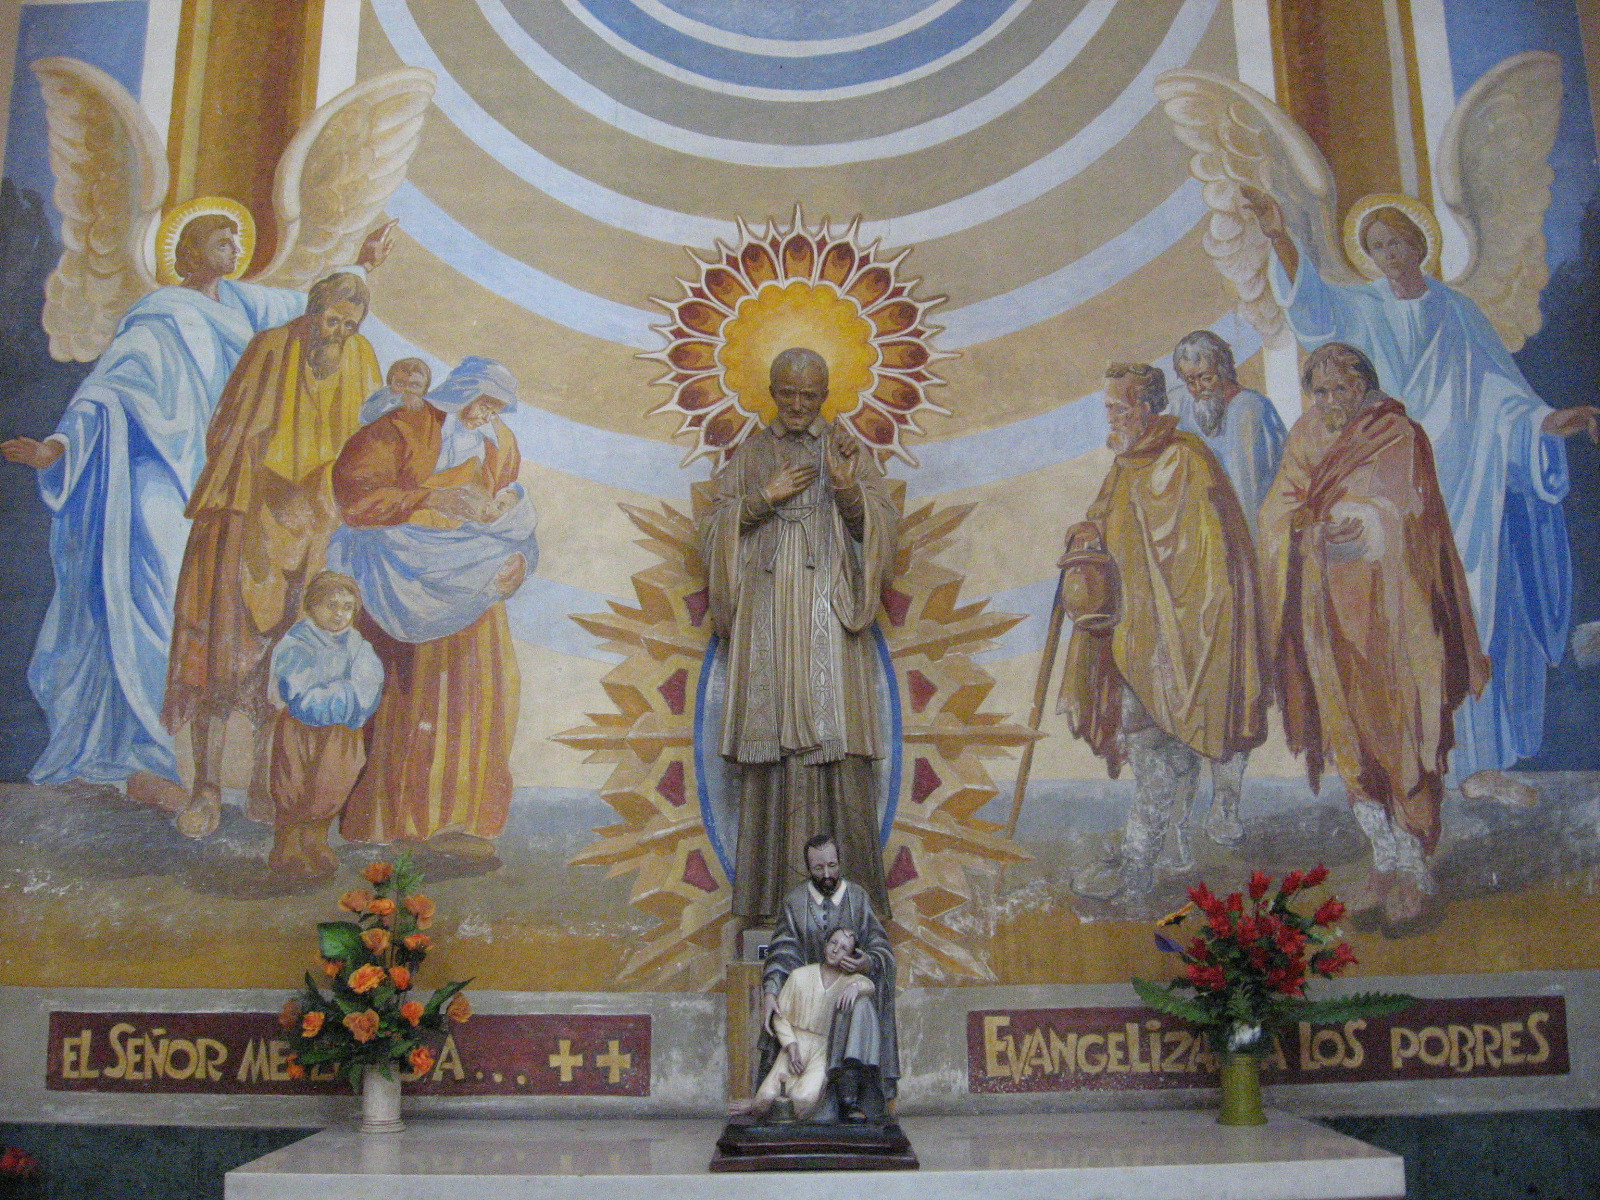 St. Peter the Apostle Cathedral (San Pedro Sula, Honduras)